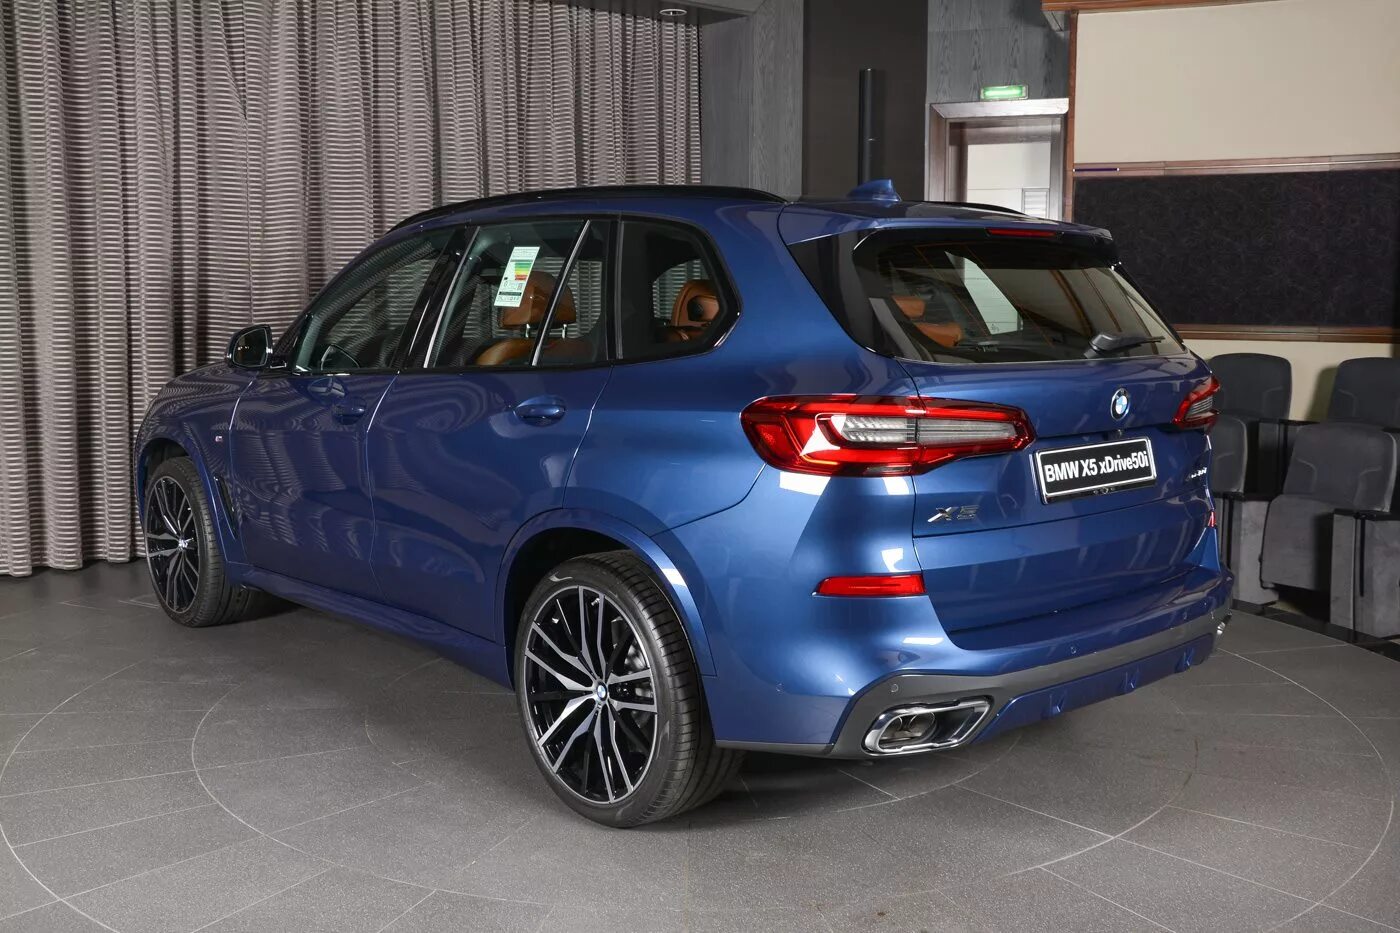 BMW x5 g05 синий. BMW x5 g05 матовый синий. BMW x5 g05 m Sport Pro. X5 BMW 2019 Blue.